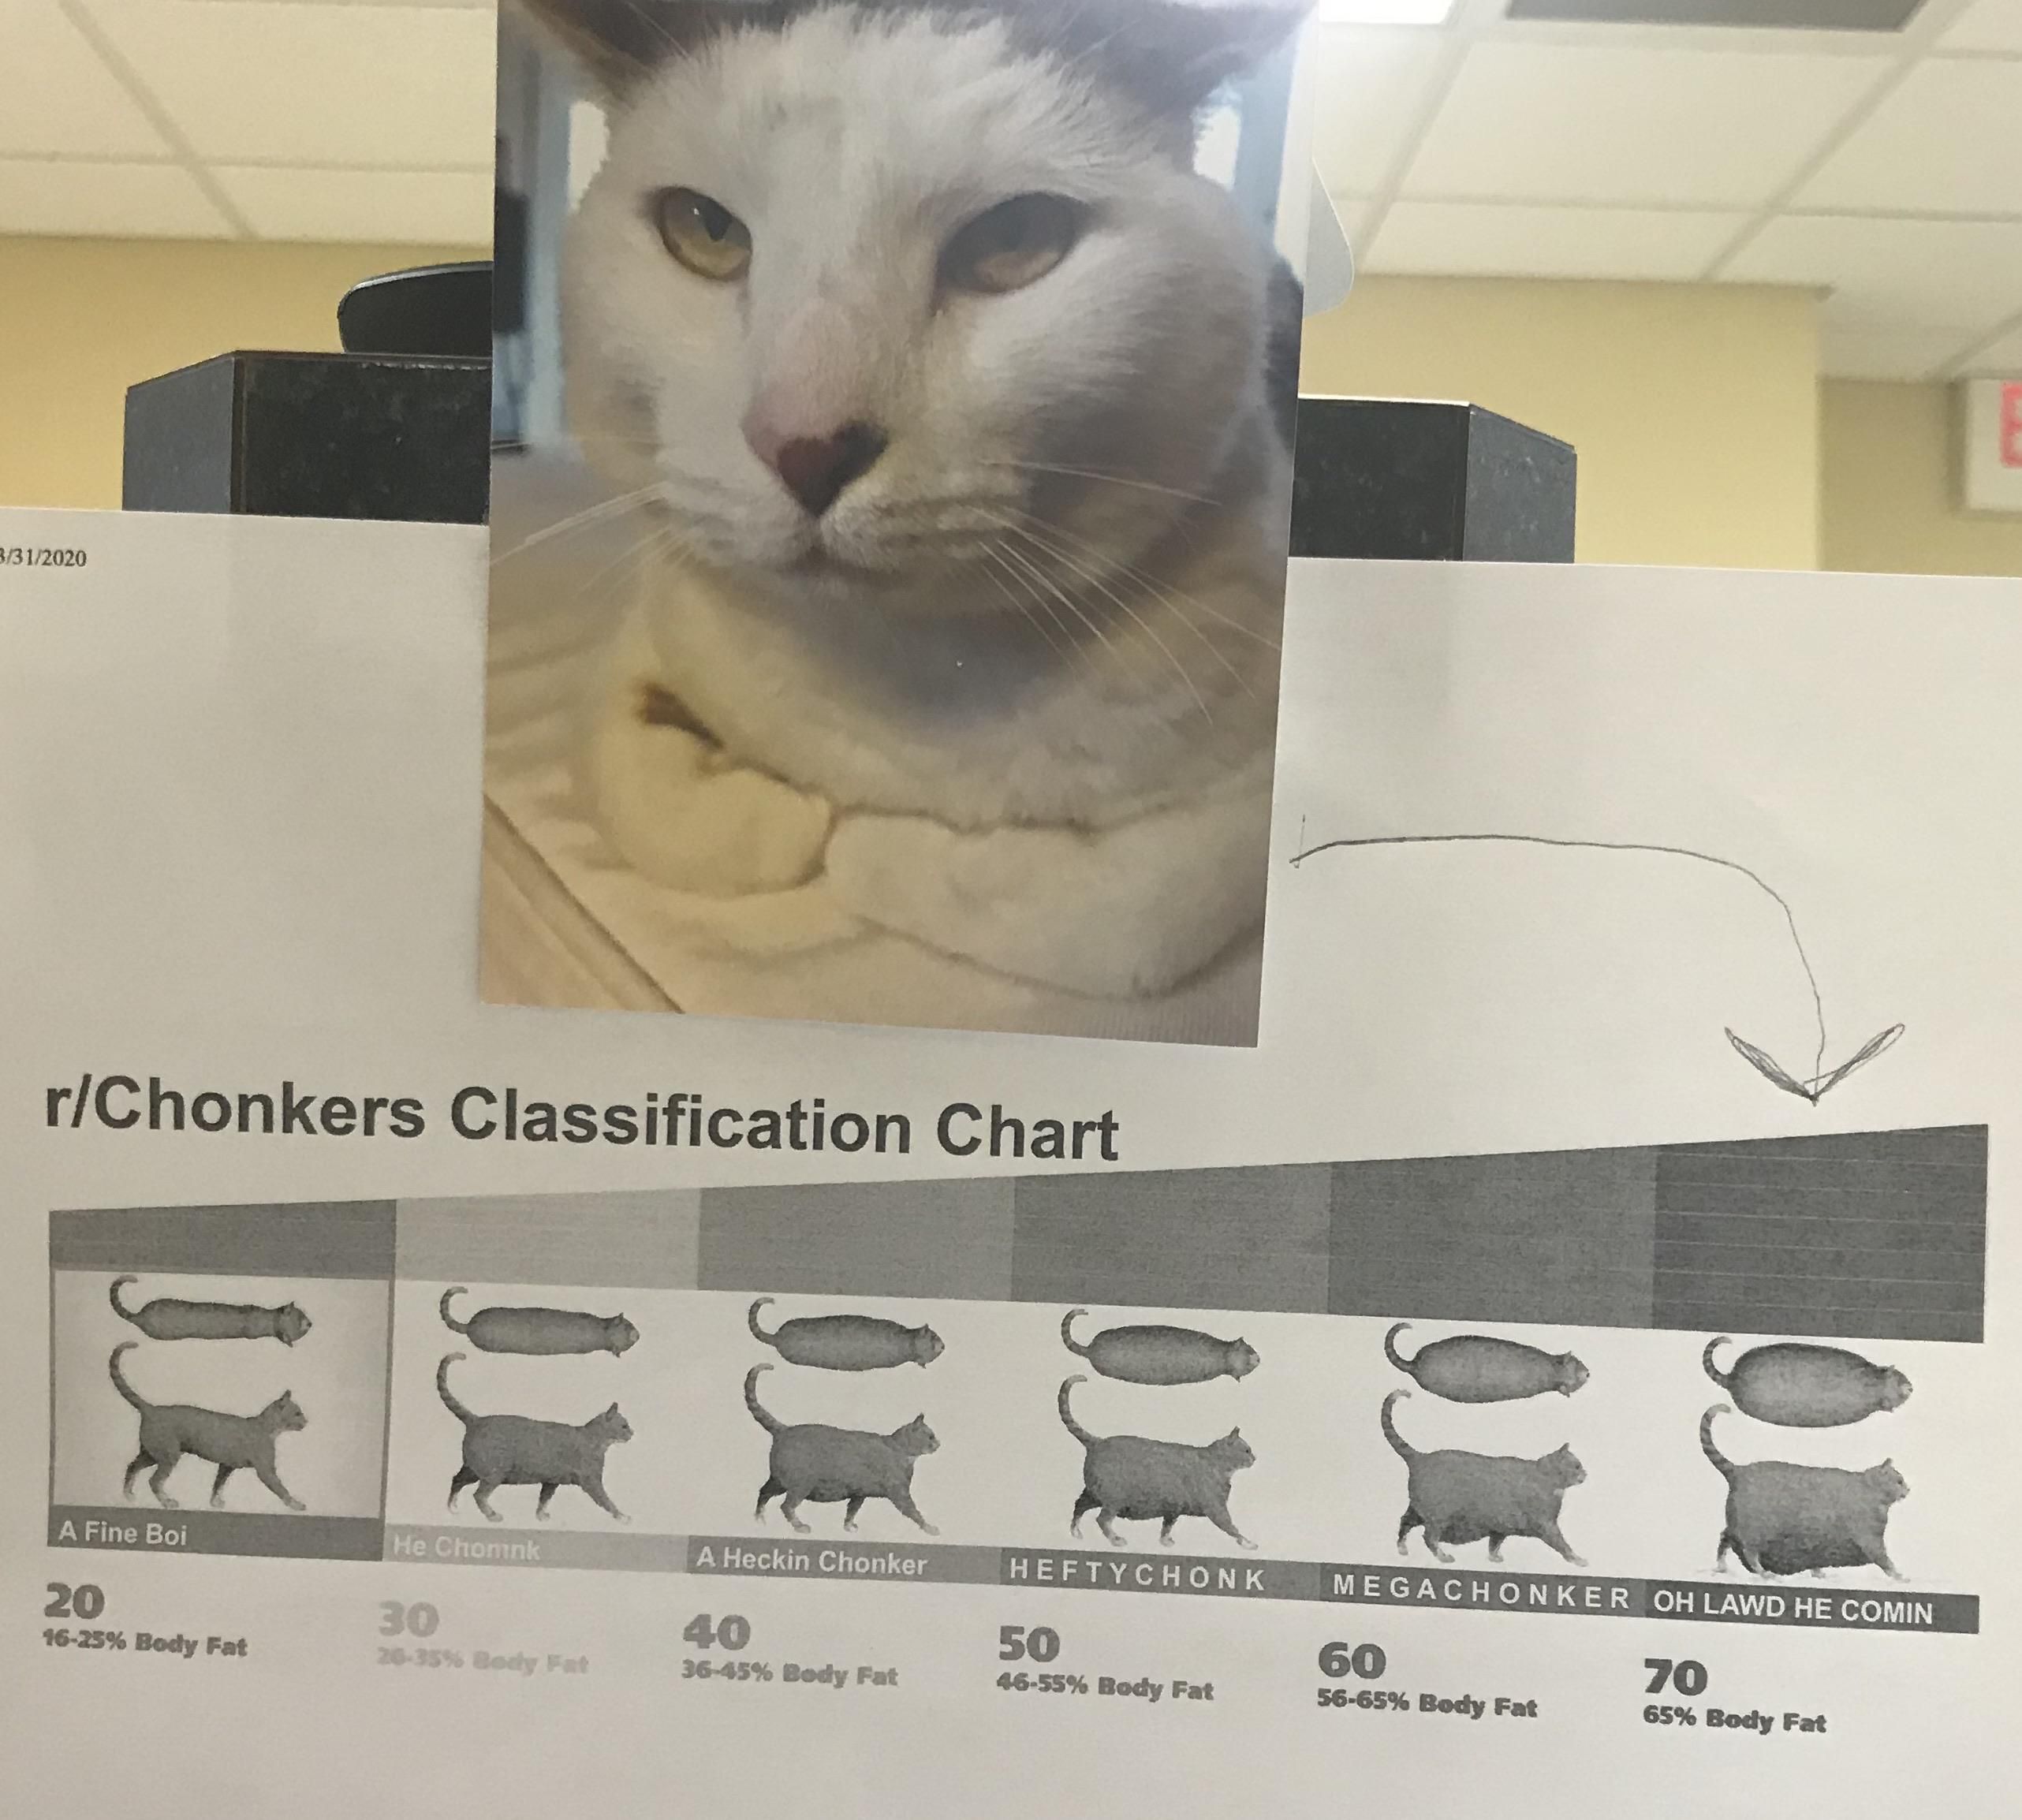 Chonker classification chart in my doctors office.